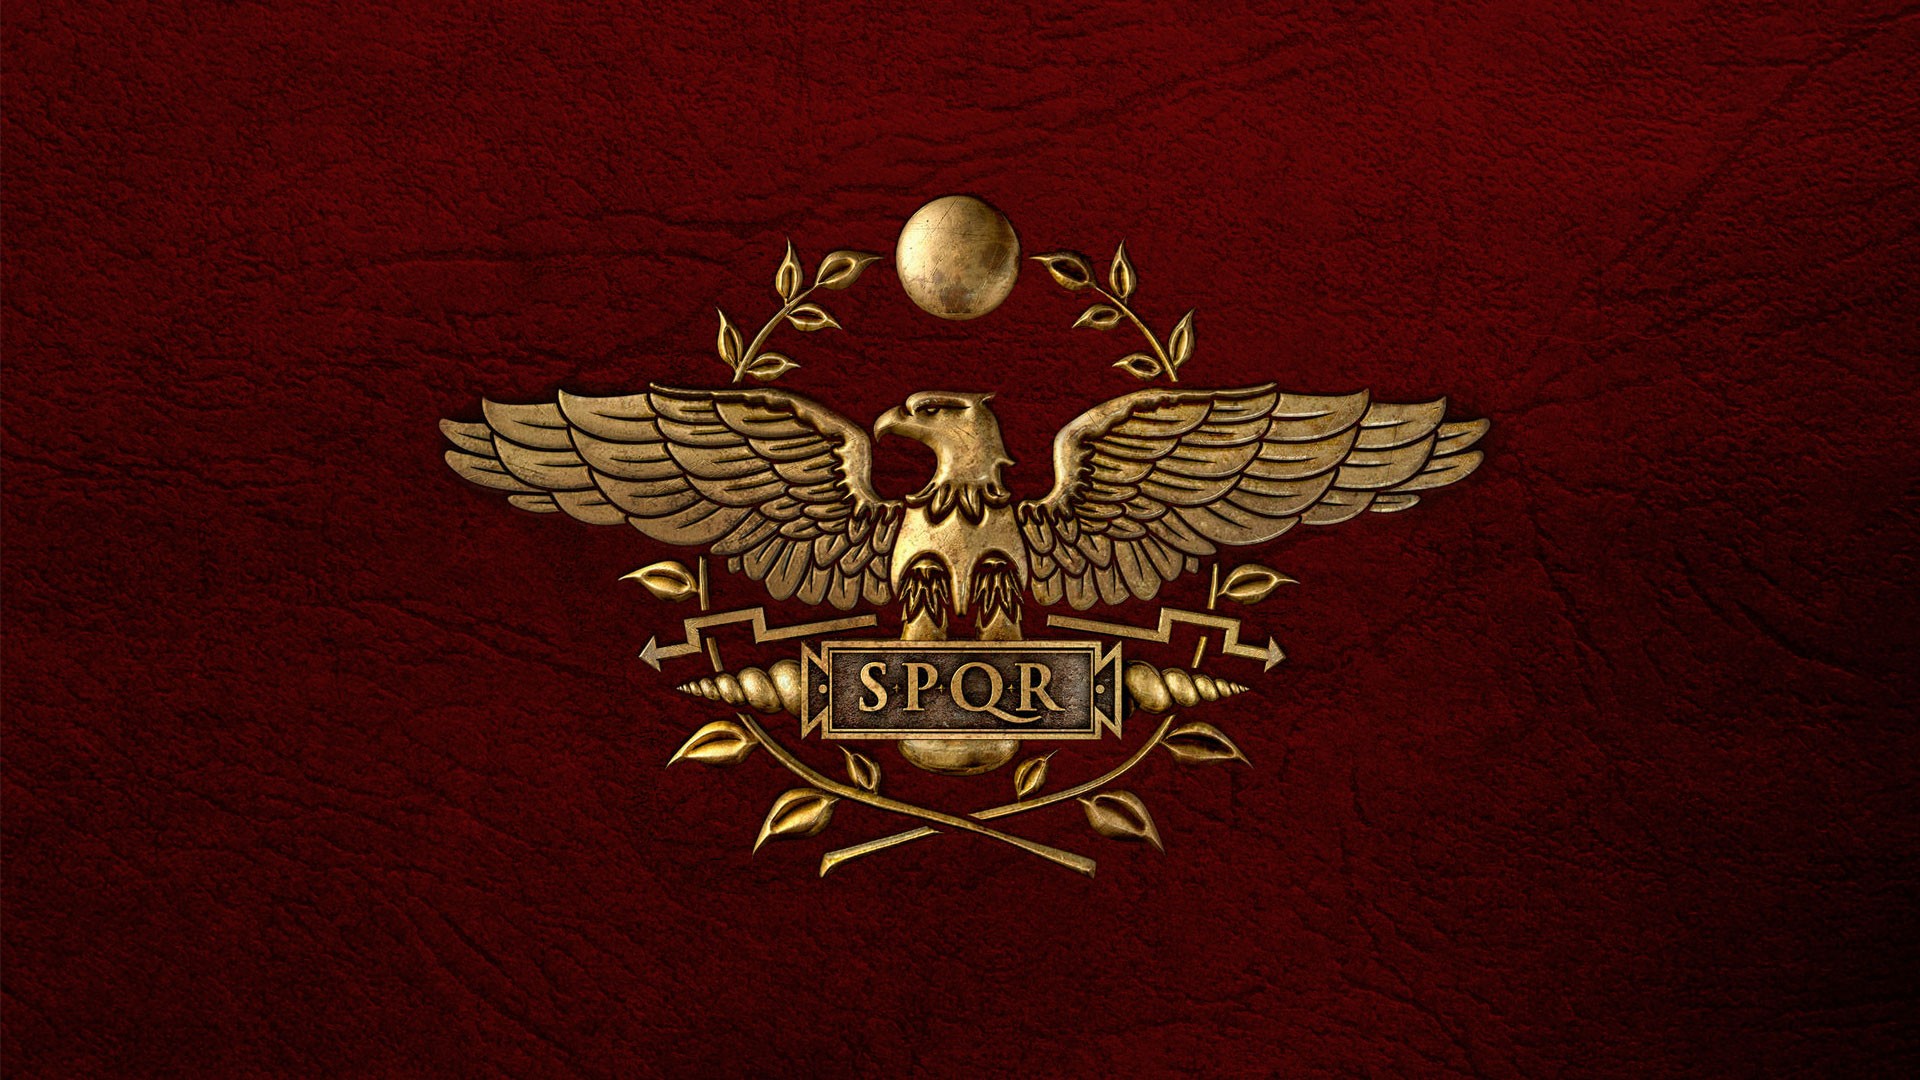 General 1920x1080 Rome Roman Italy ancient eagle history flag roman empire digital art simple background